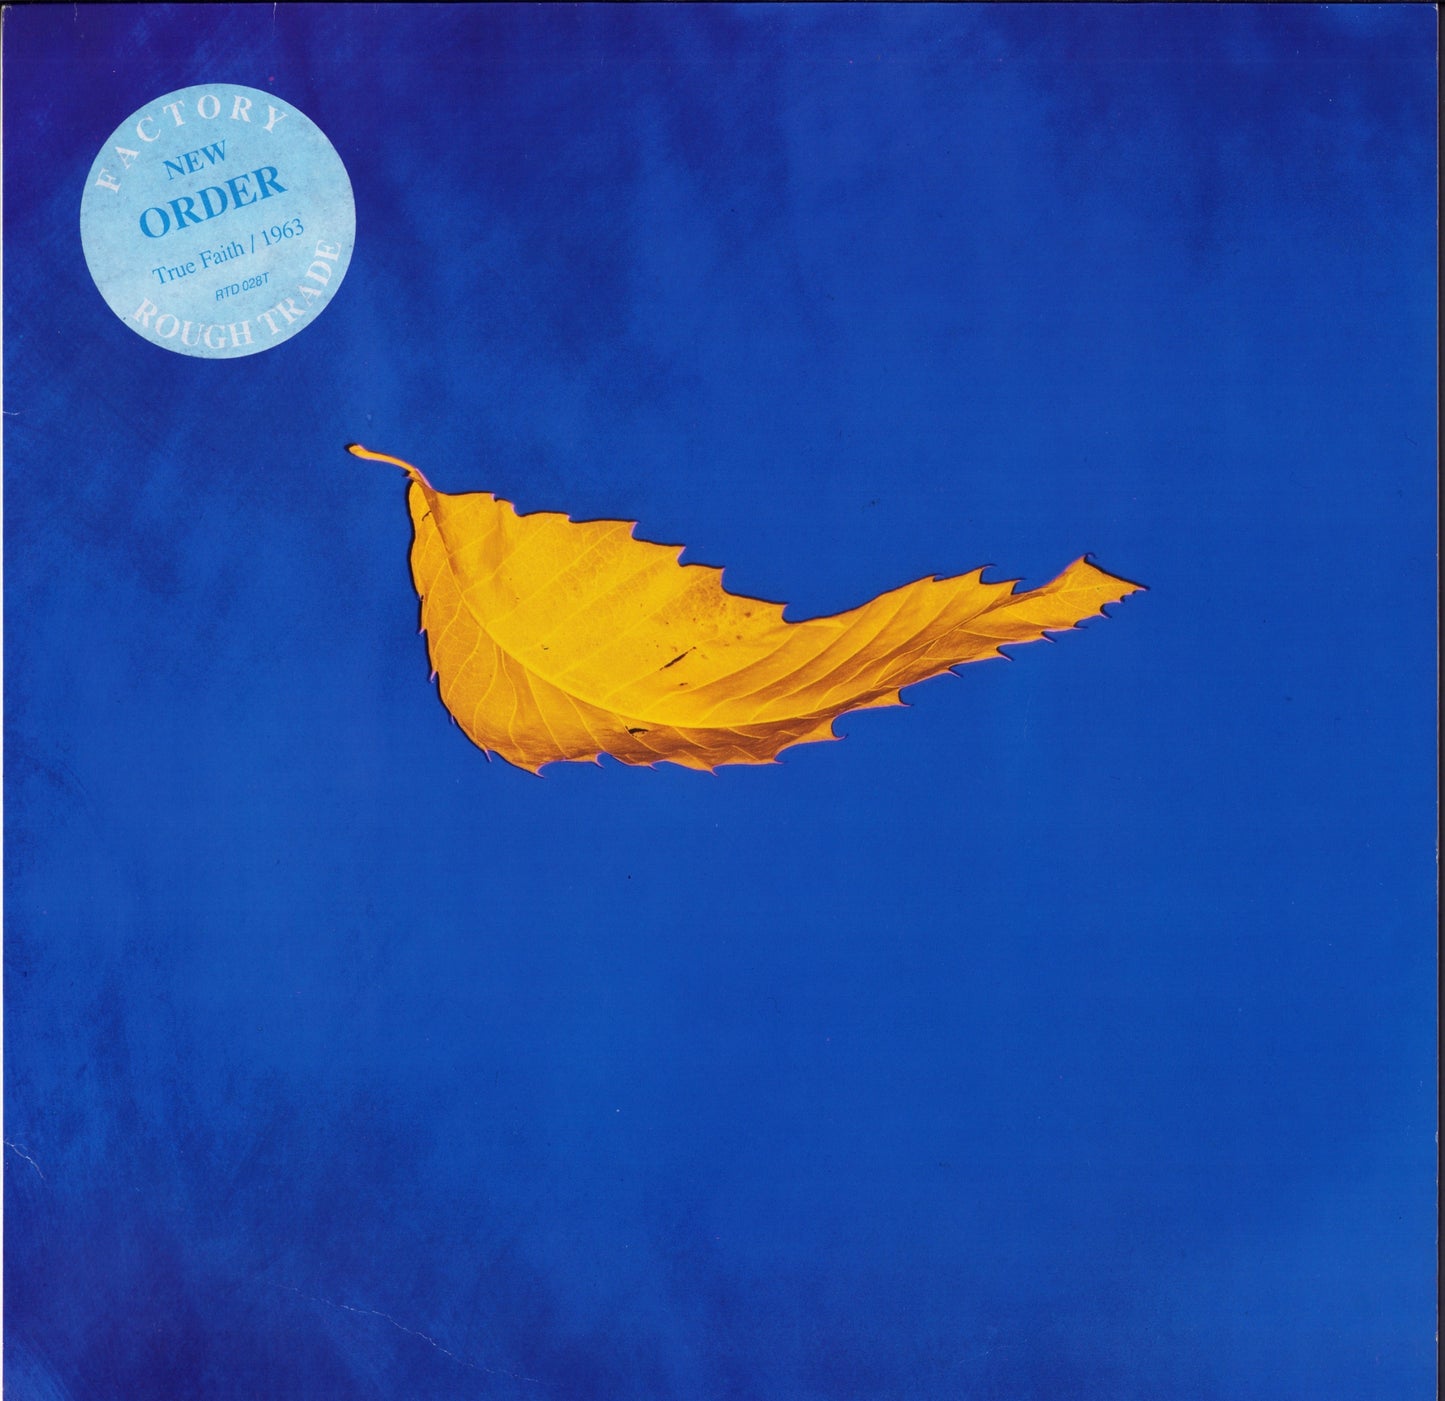 New Order - True Faith / 1963 Vinyl 12"